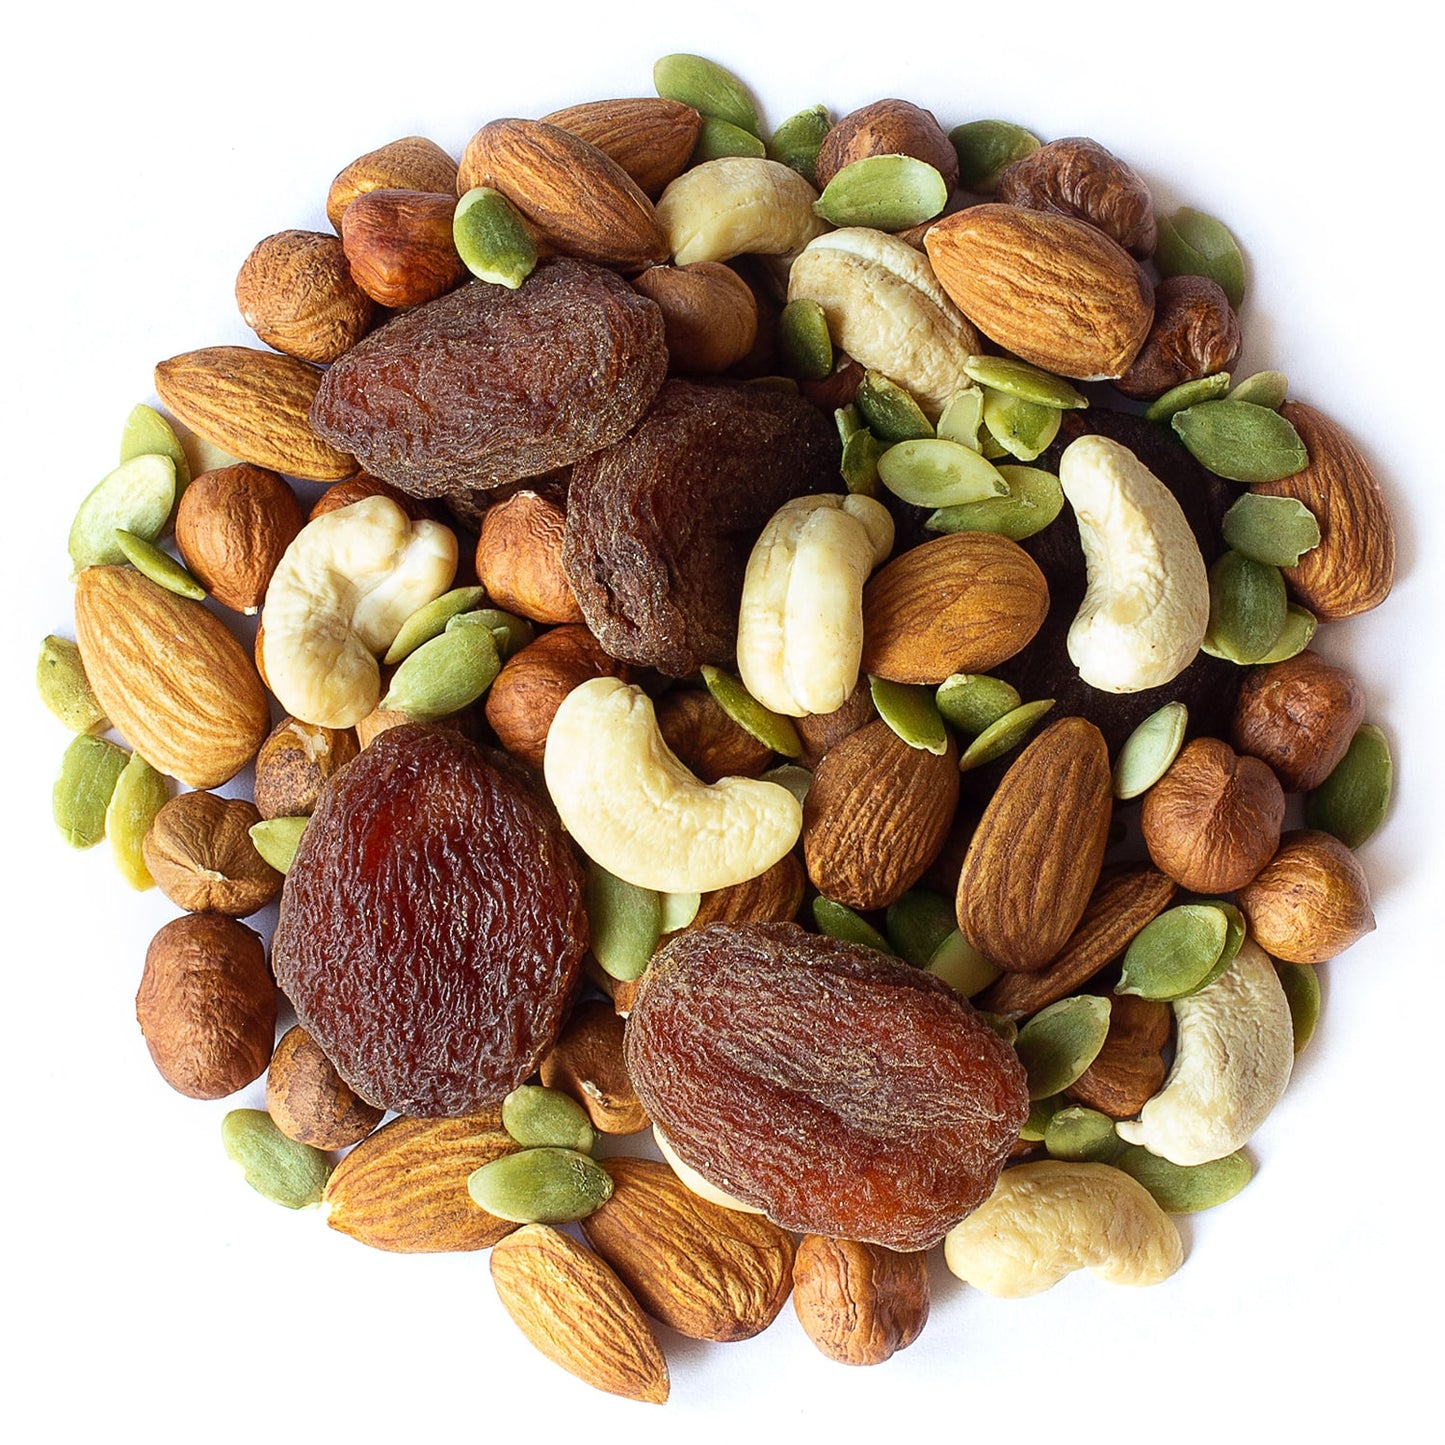 Organic Active Life Trail Mix — Raw and Non-GMO Snack Mix Contains Cashews, Pumpkin Seeds, Apricots, Hazelnuts, Almonds. Vegan, Kosher, Bulk